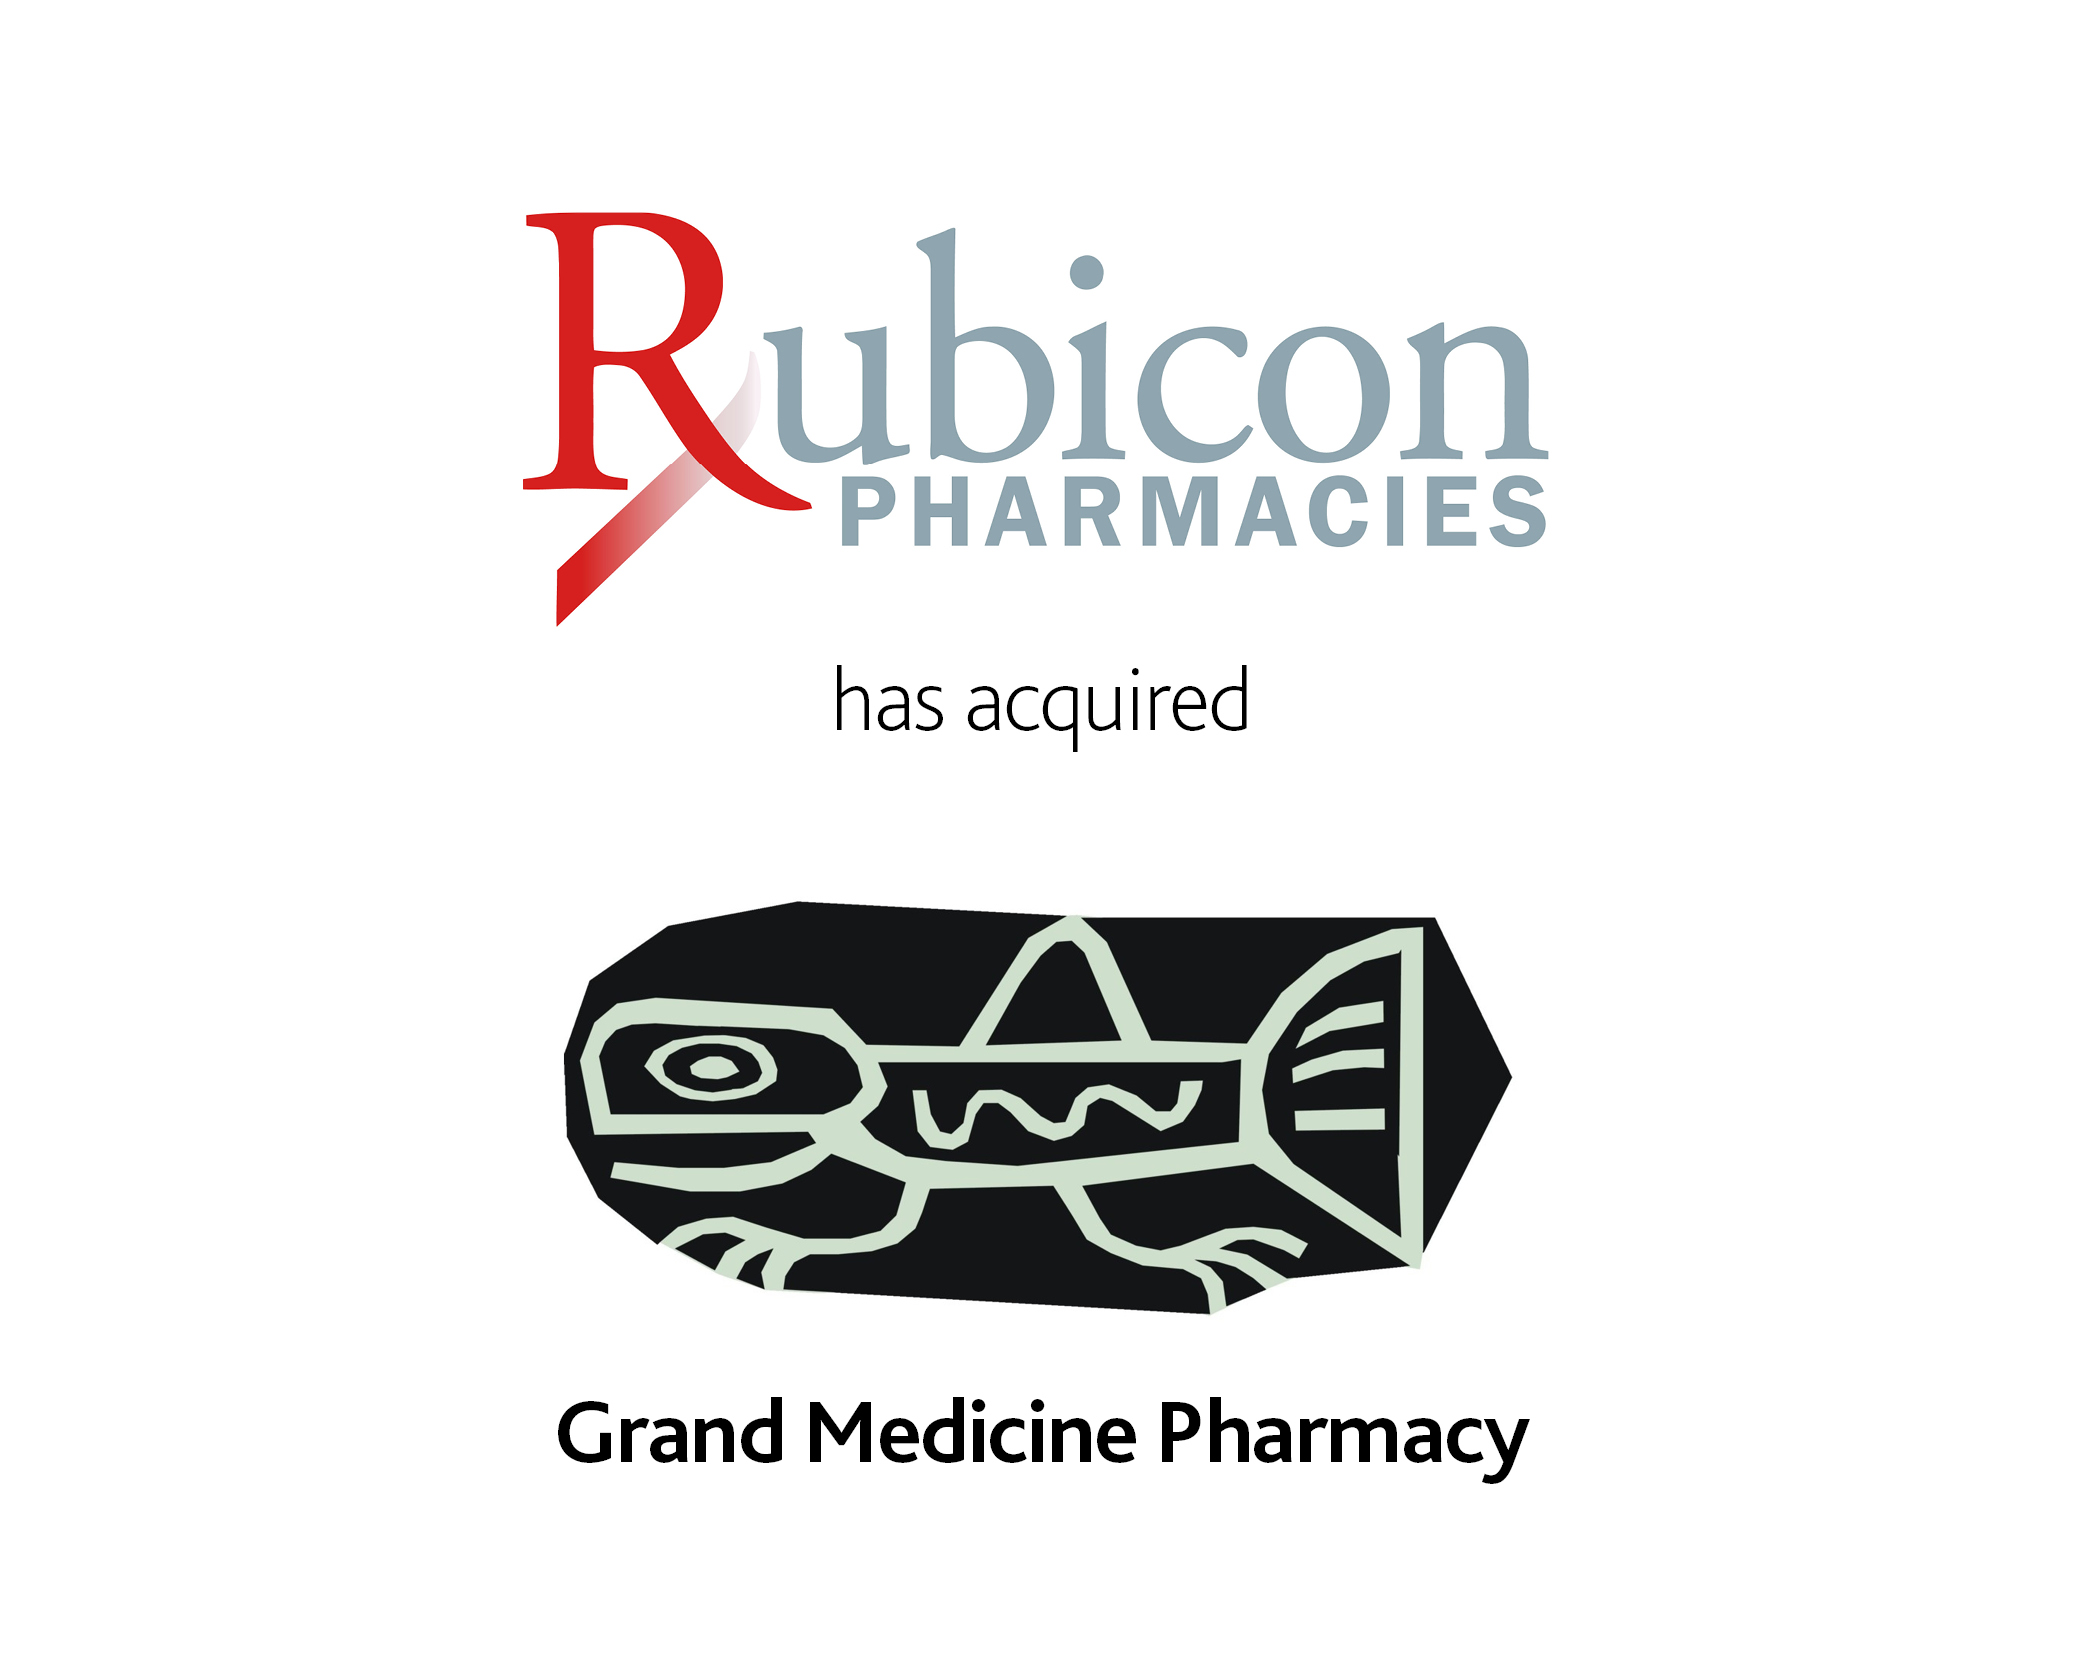 Rubicon Pharmacies has acquired Grand Medicine Pharmacy.